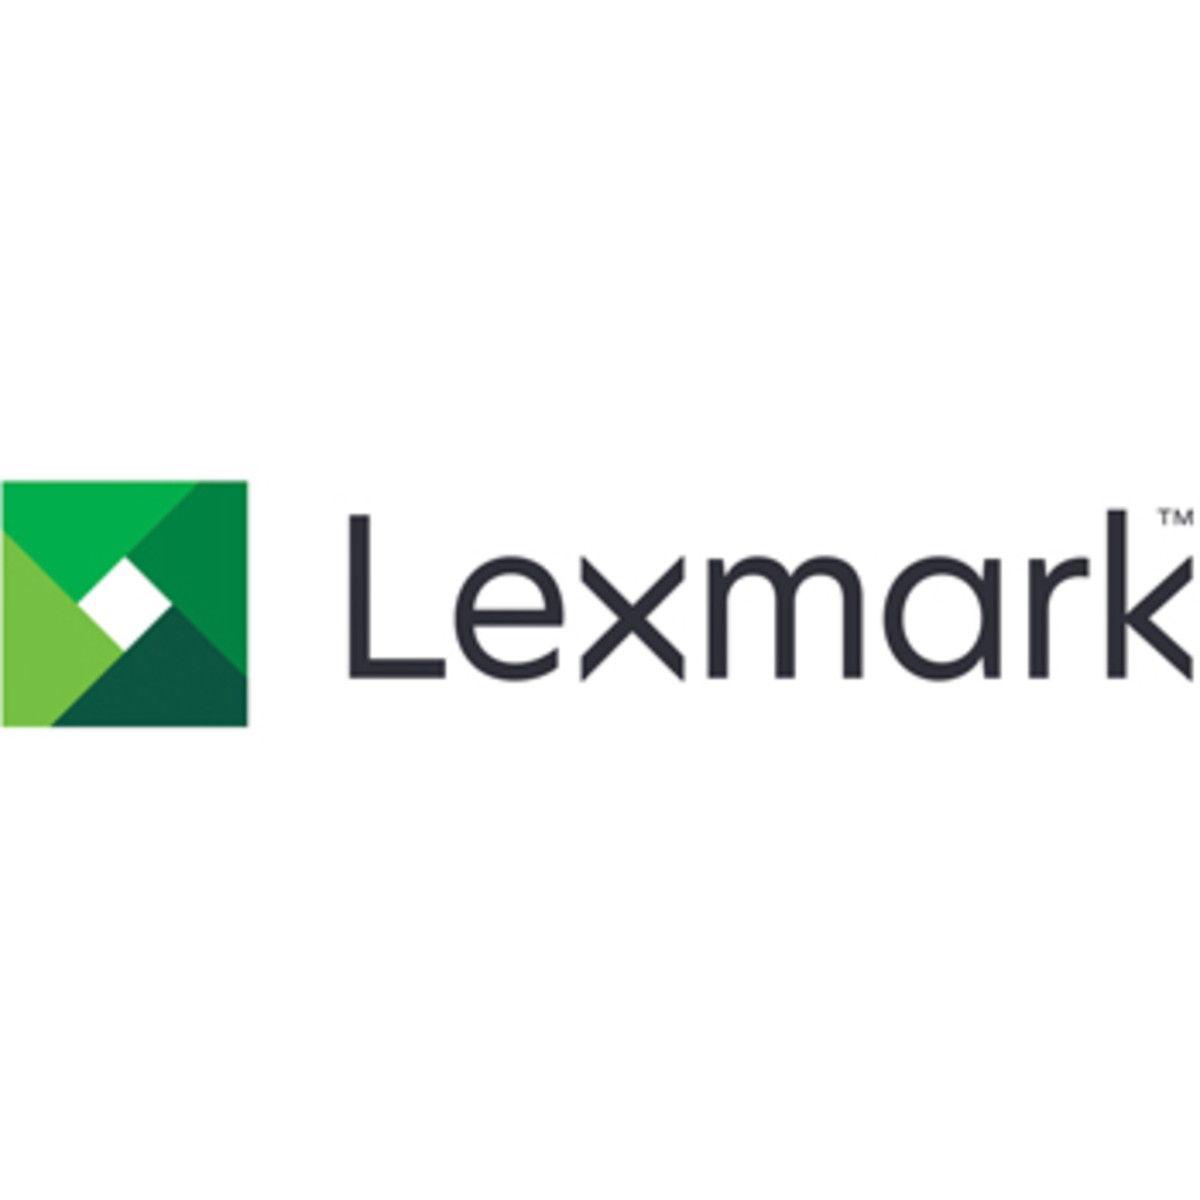 Lexmark Partner Logo - Lexmark launches new MPS partner programme